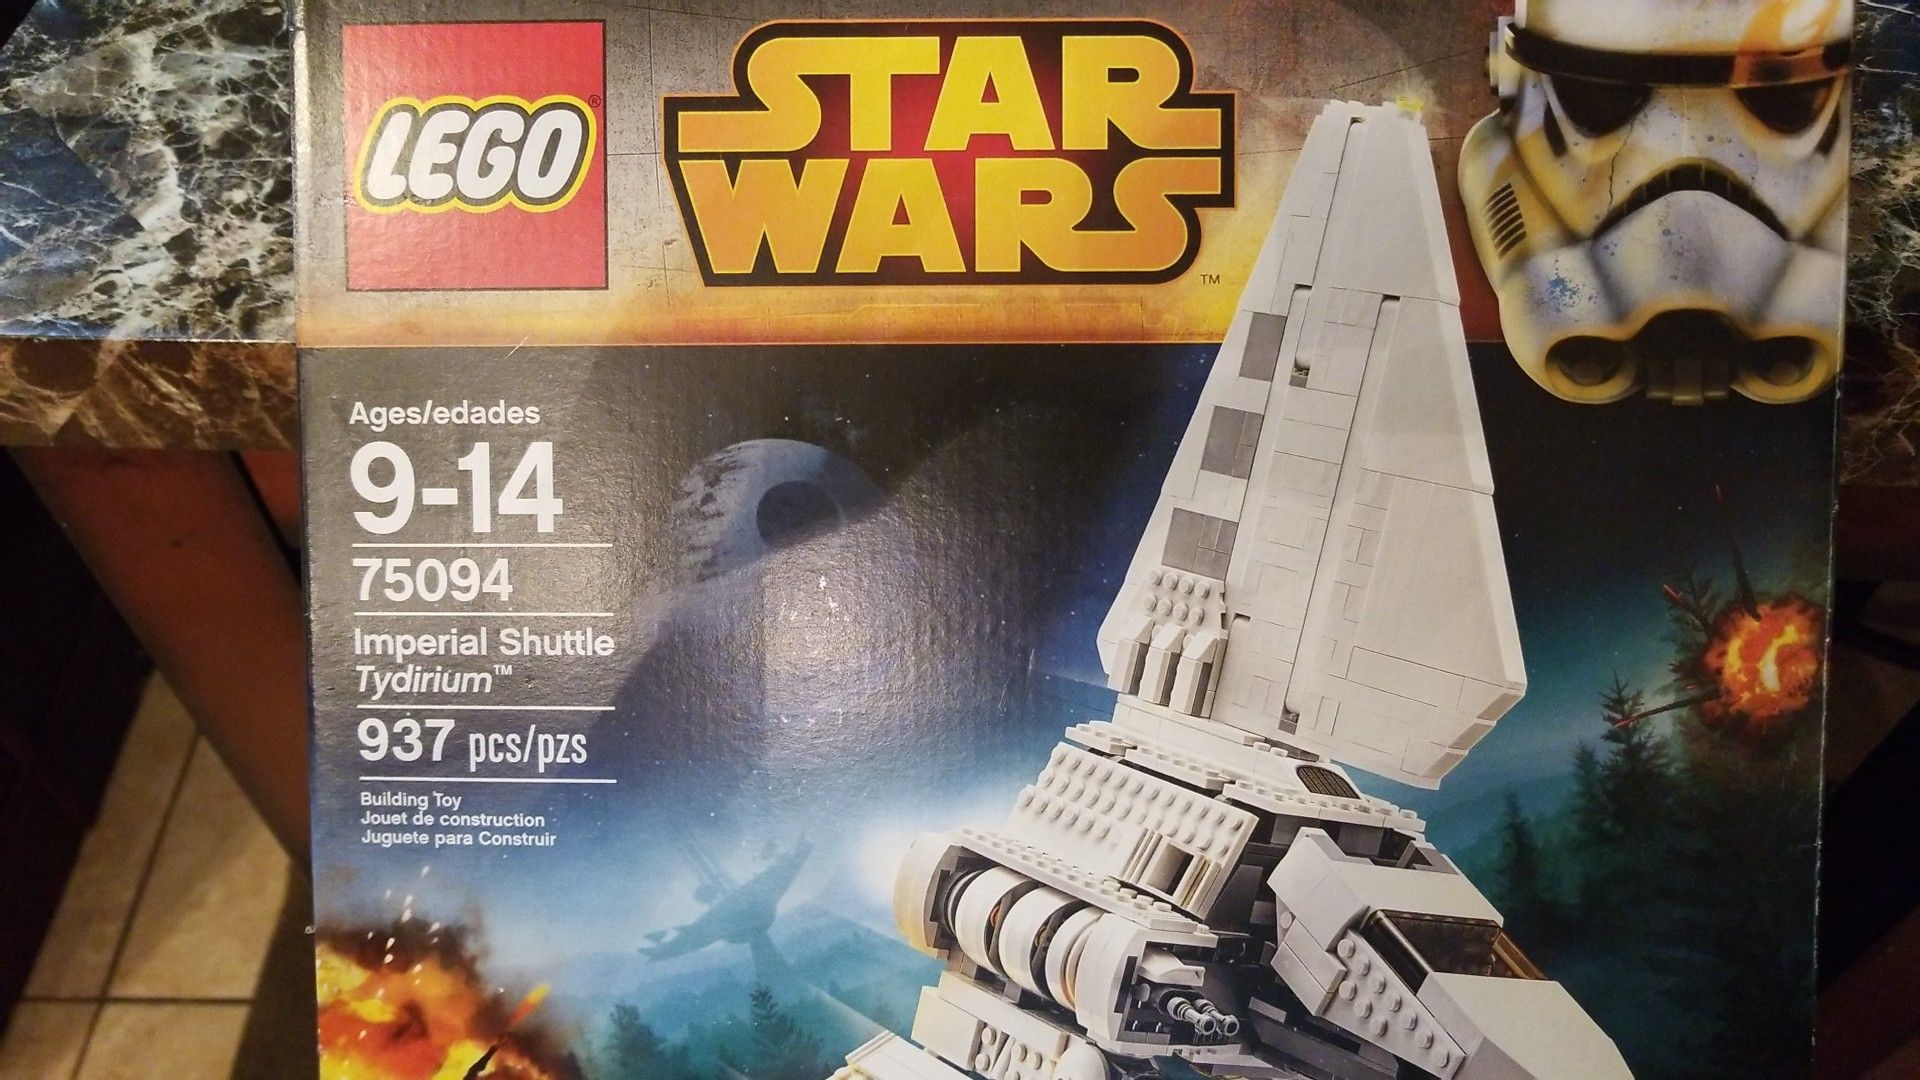 Disney's Star Wars Lego Imperial Shuttle